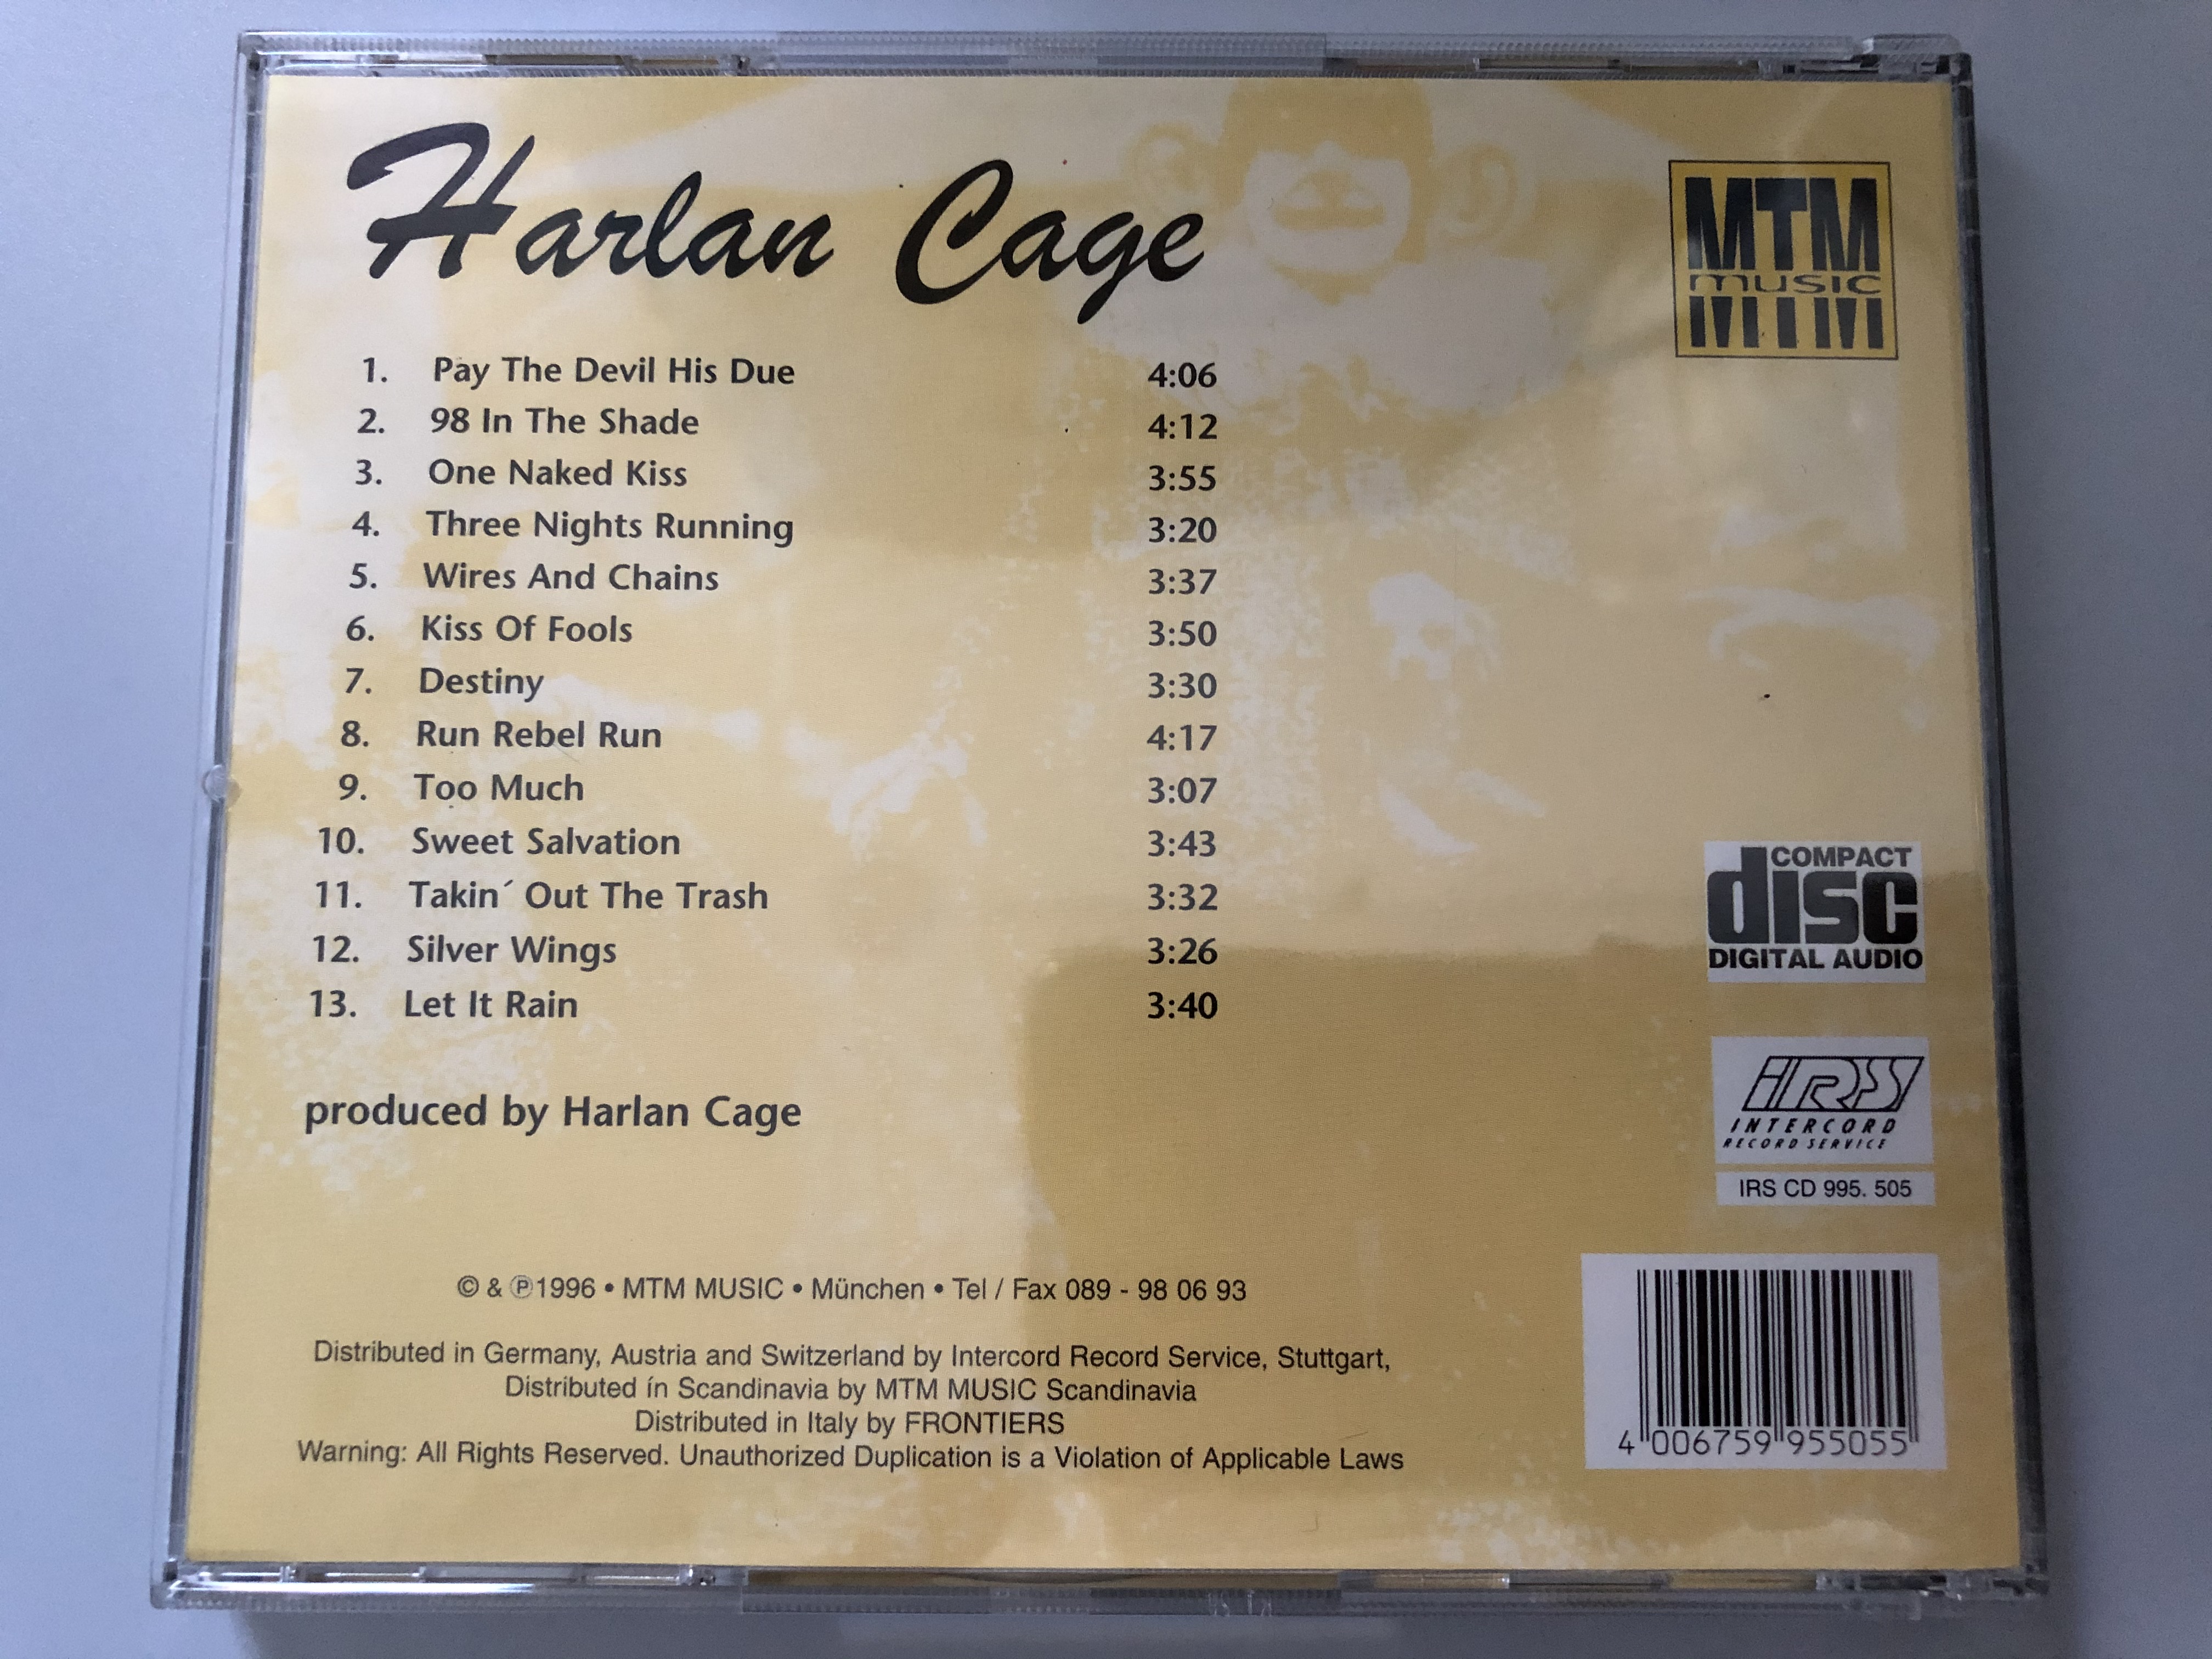 harlan-cage-mtm-music-audio-cd-1996-19965-9-.jpg